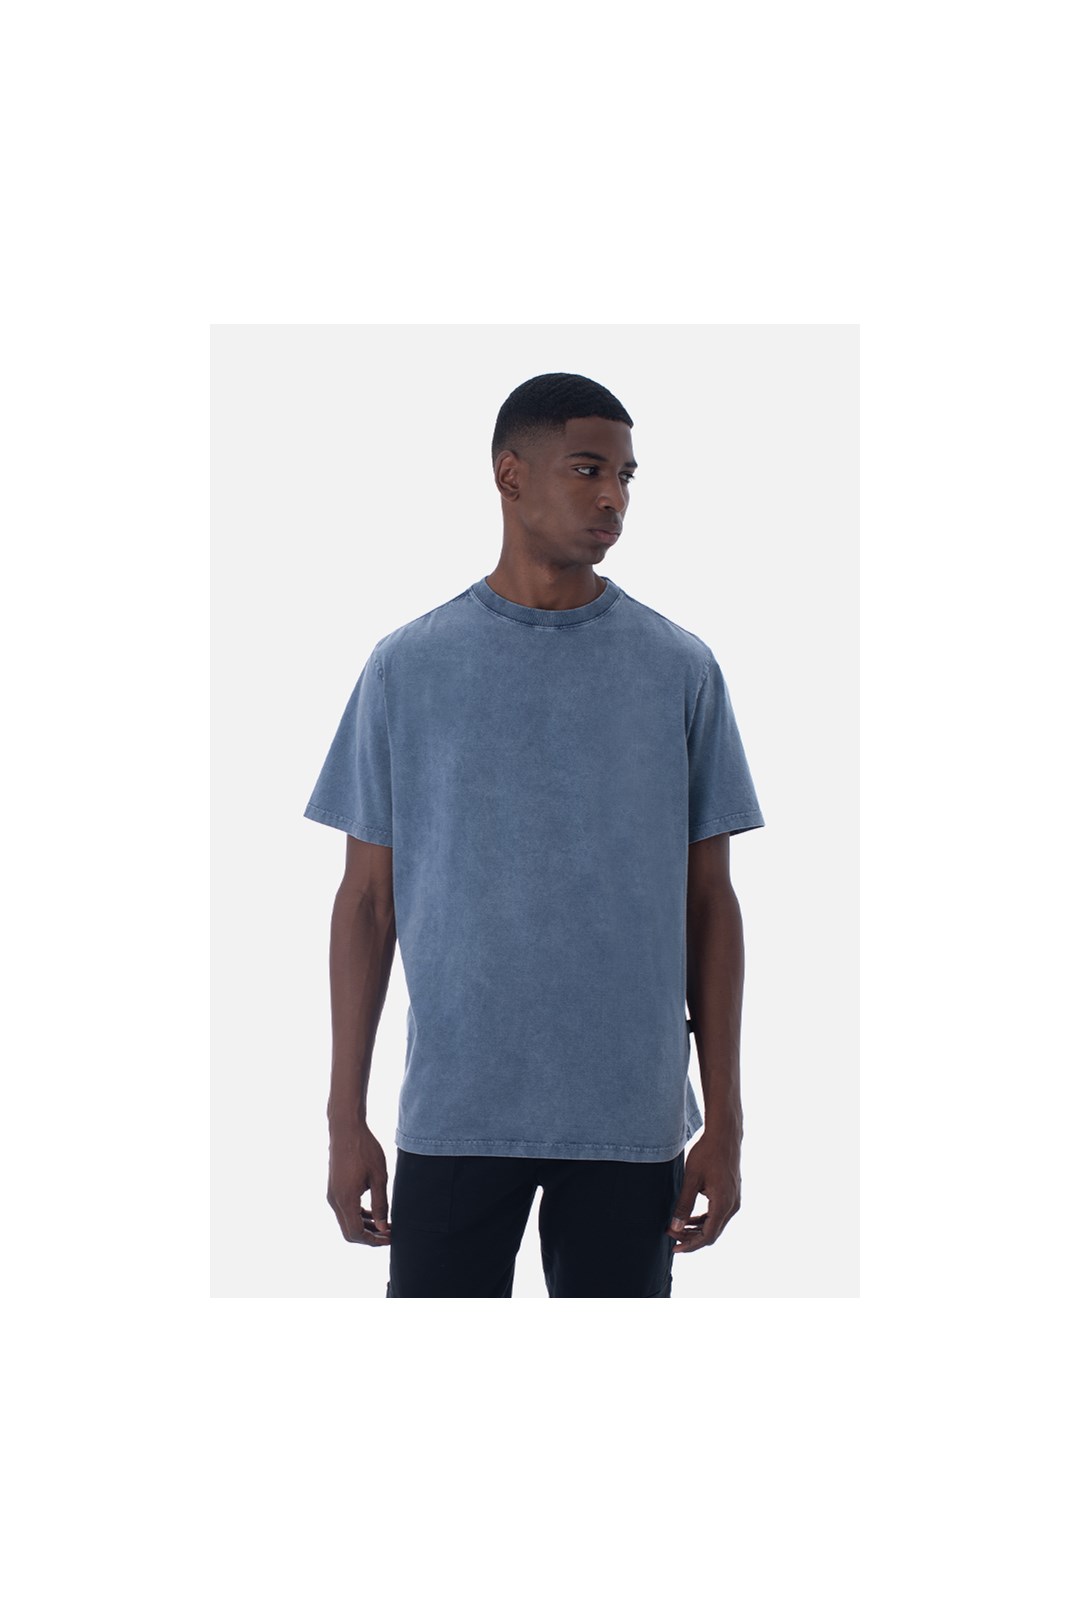 Camiseta Bold Approve Basic Azul Estonada